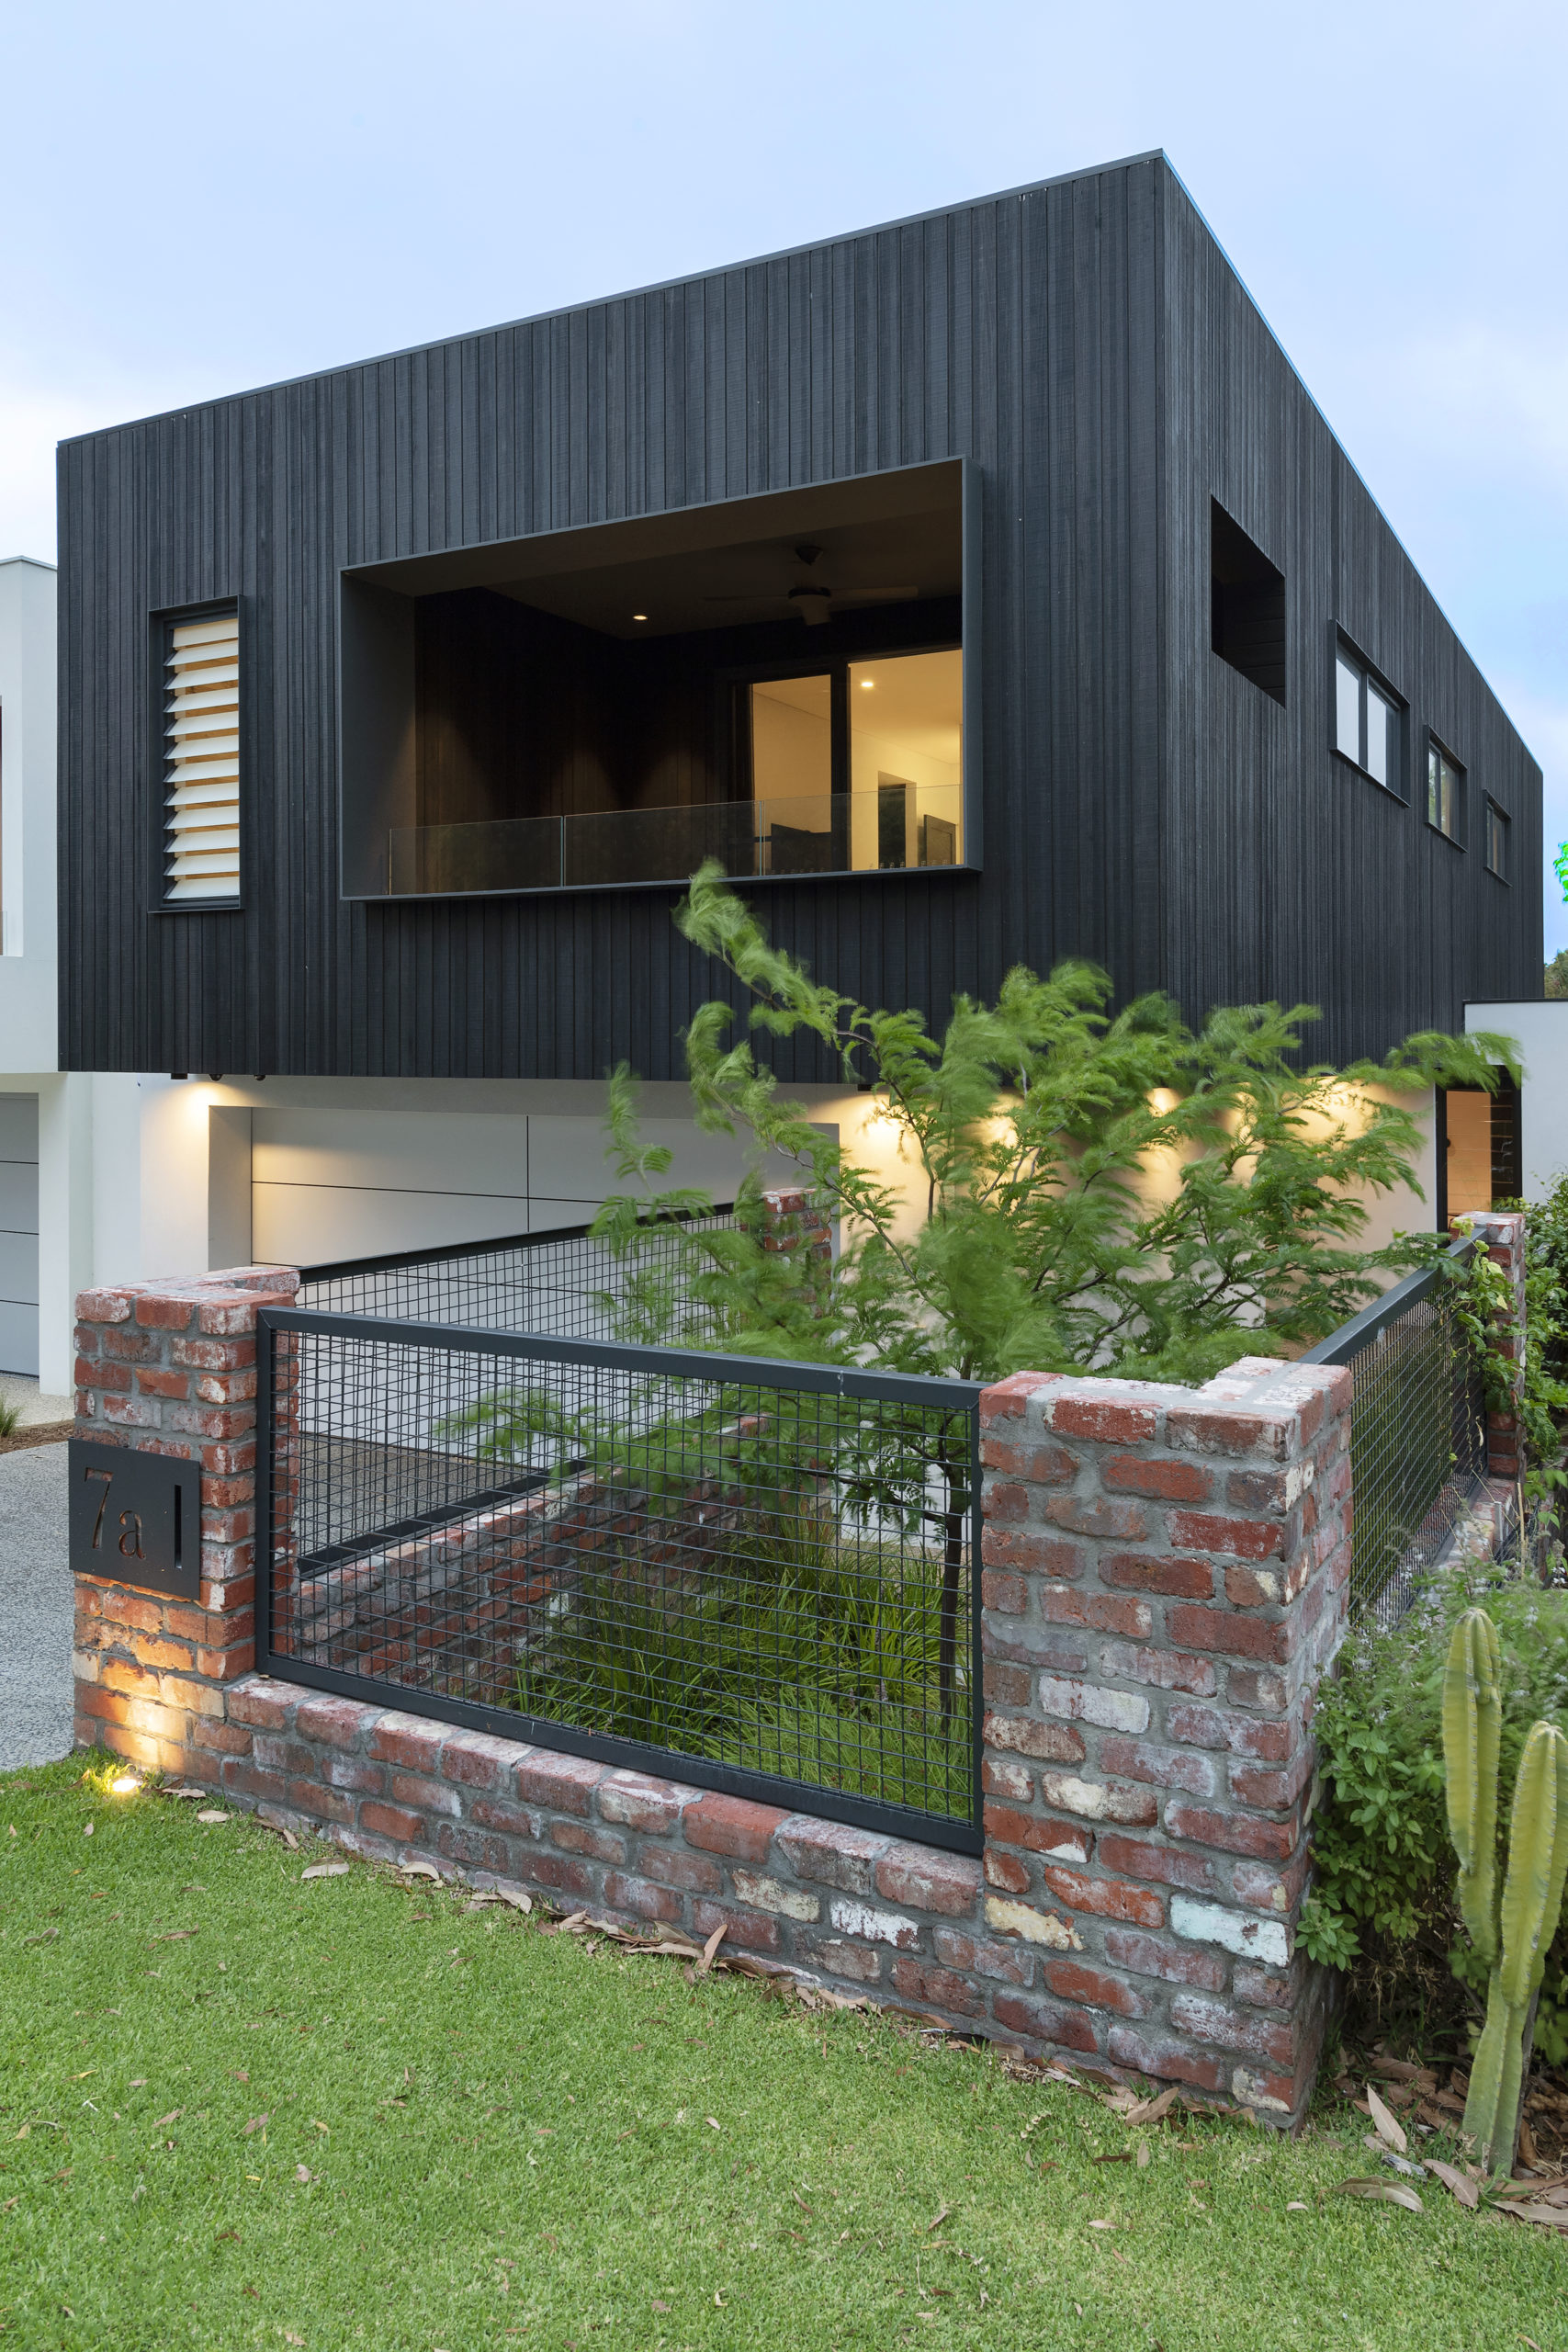 Black Box Luxury Home - Vulcan Cladding in Ebony Finish - Abodo Wood(6)